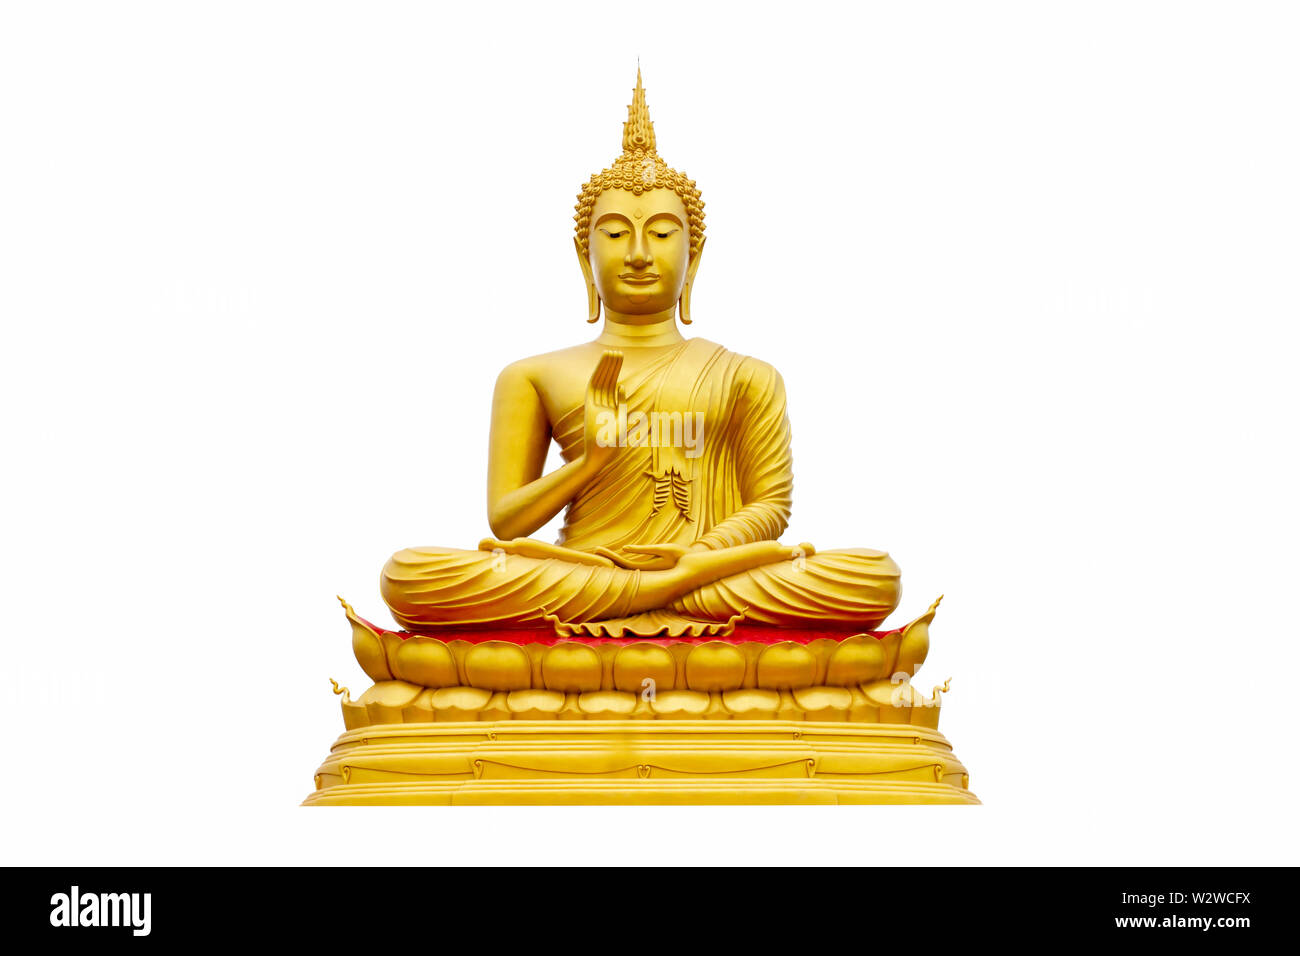 Golden Buddha on a white background Stock Photo